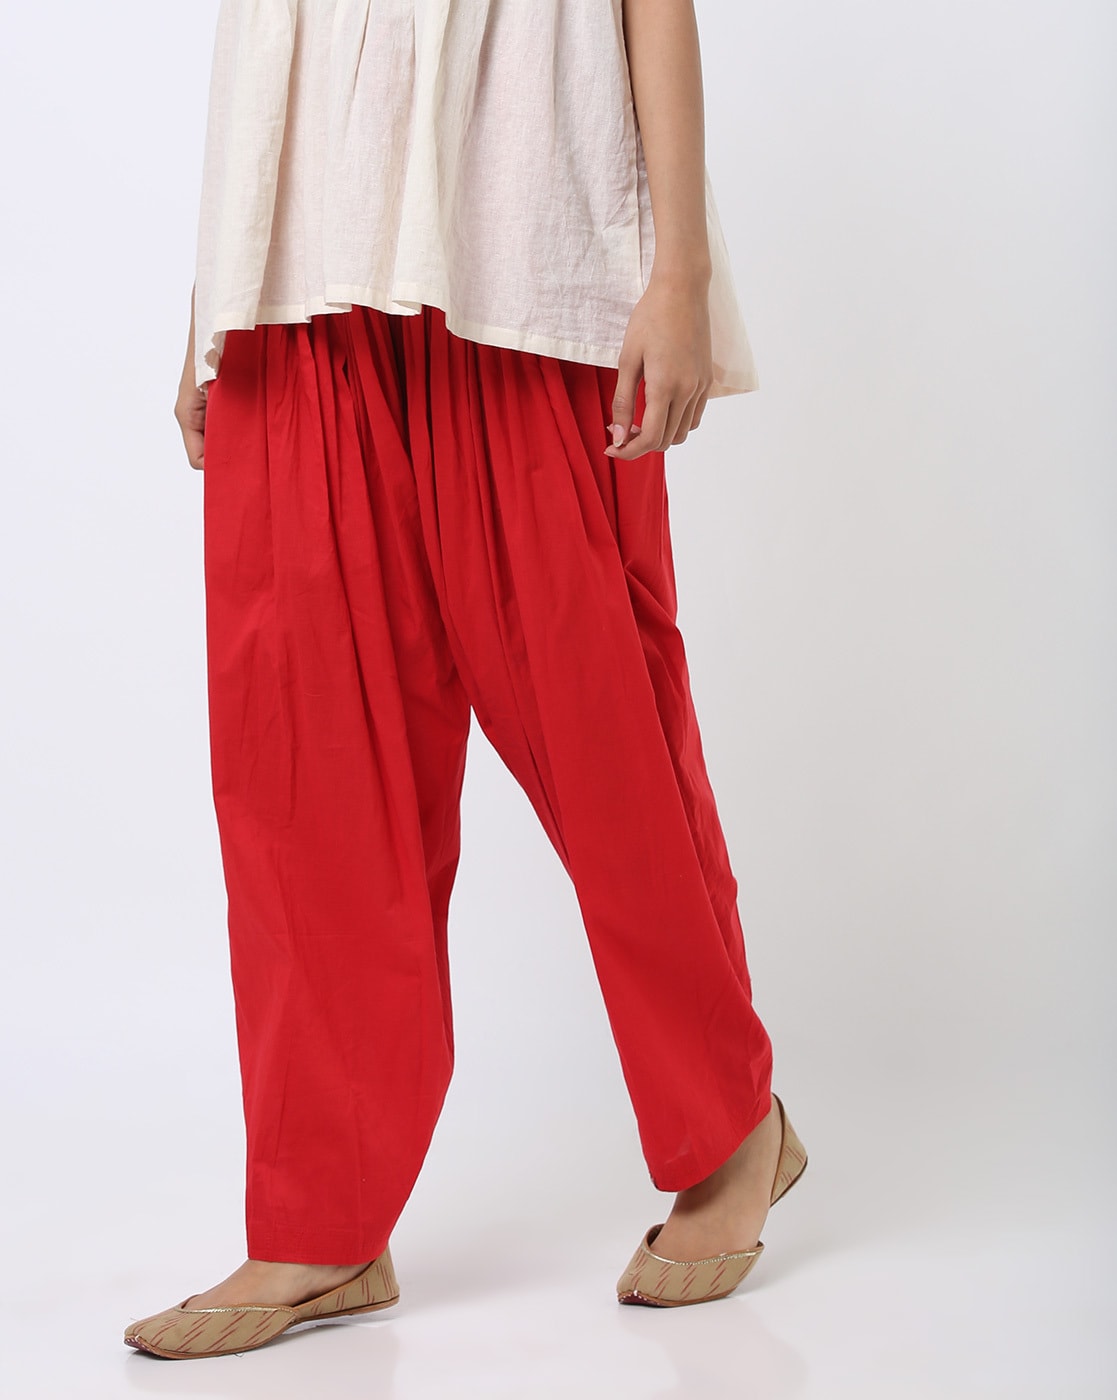 Women'S Cotton Traditional Patiala Salwar Red, White & Black Combo Pack Of  3 Pcs | eBay